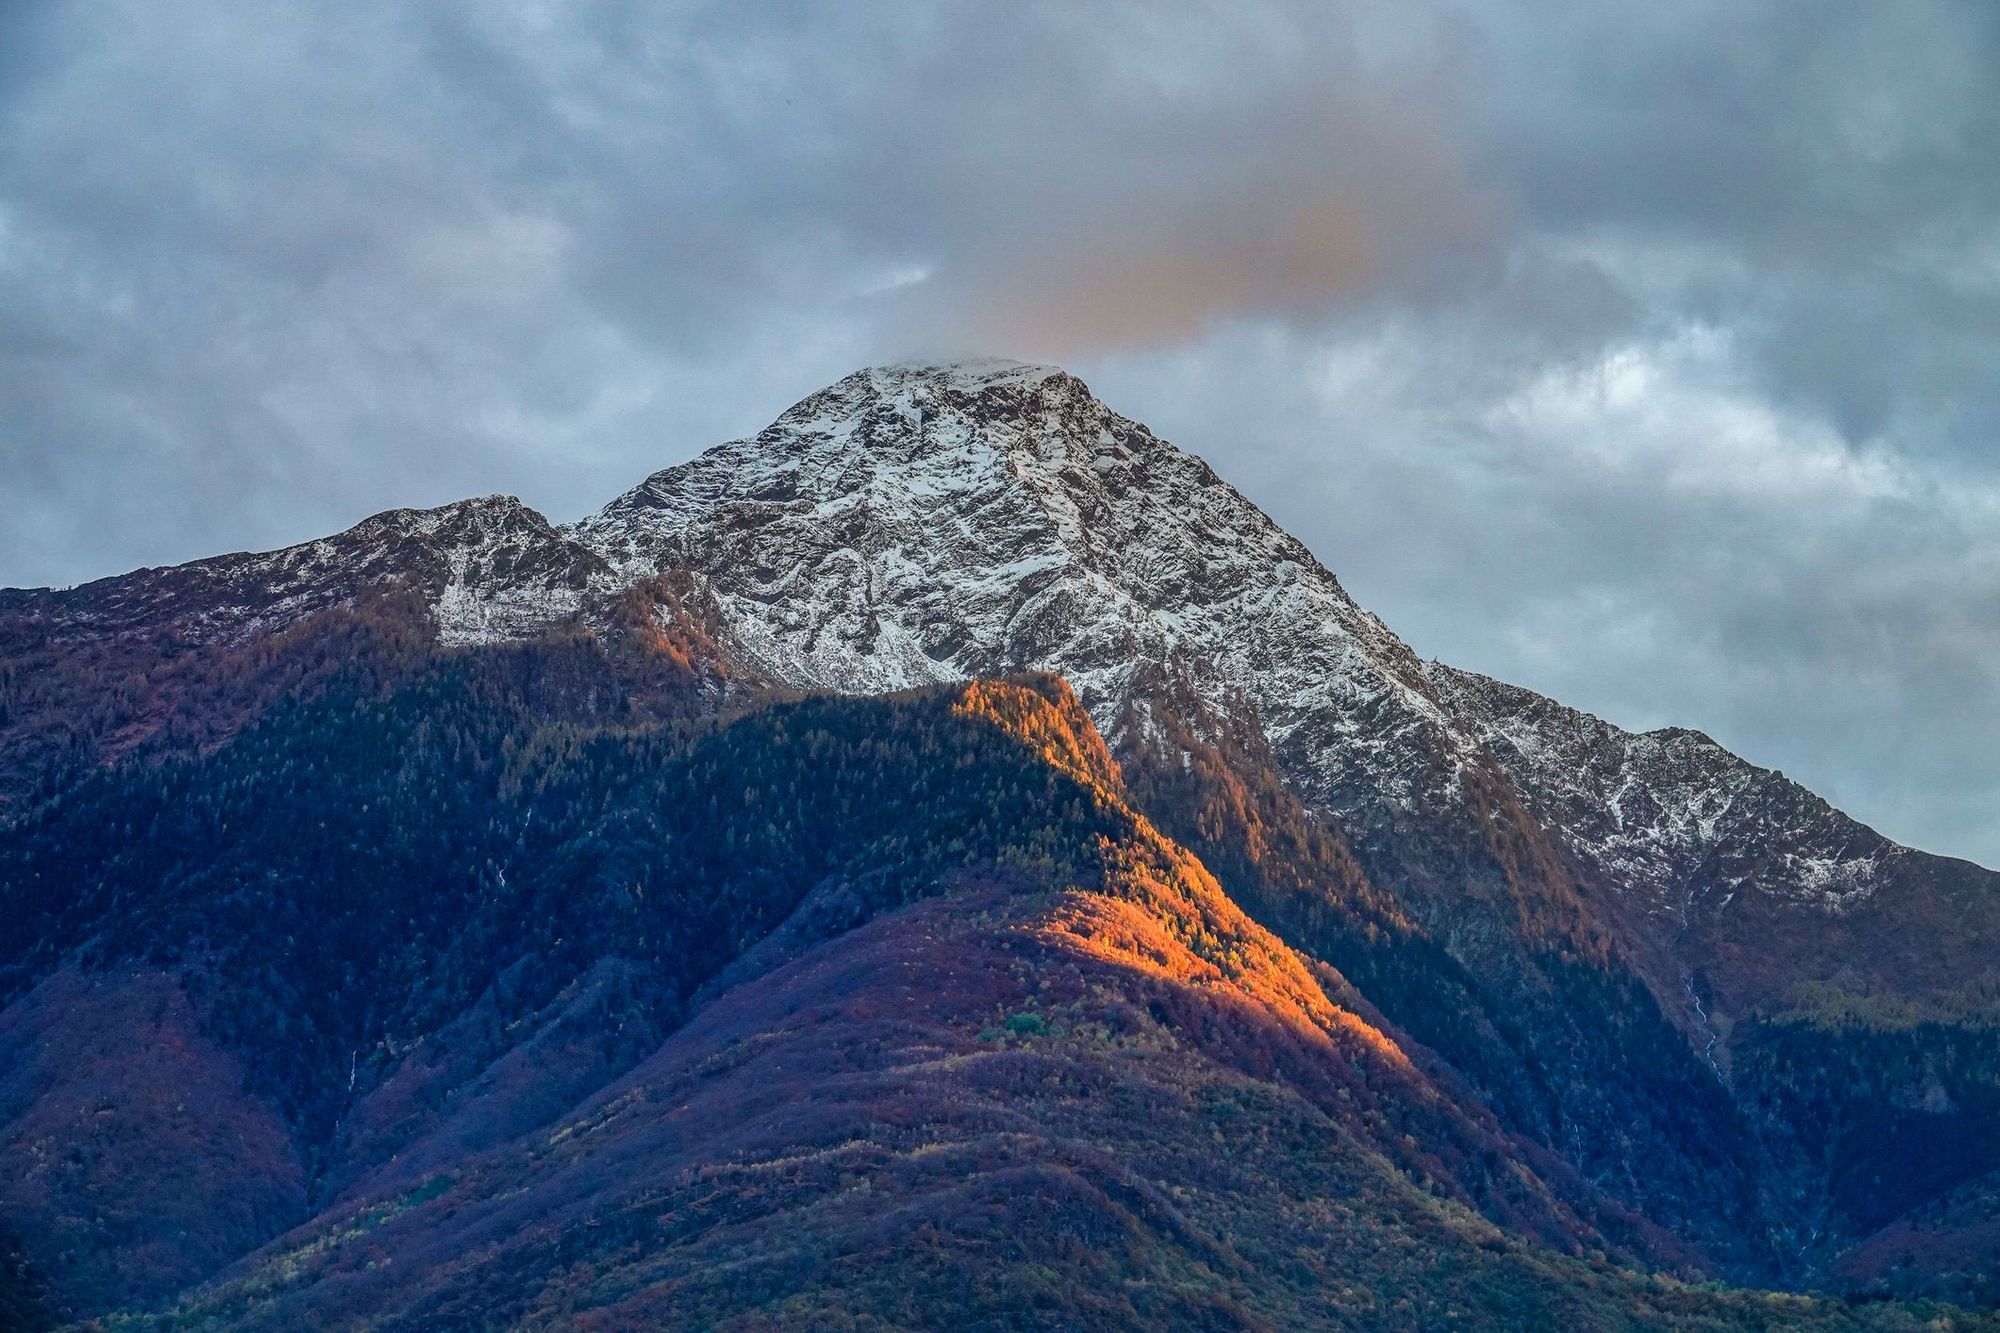 Mount Legnone summit in Italy.